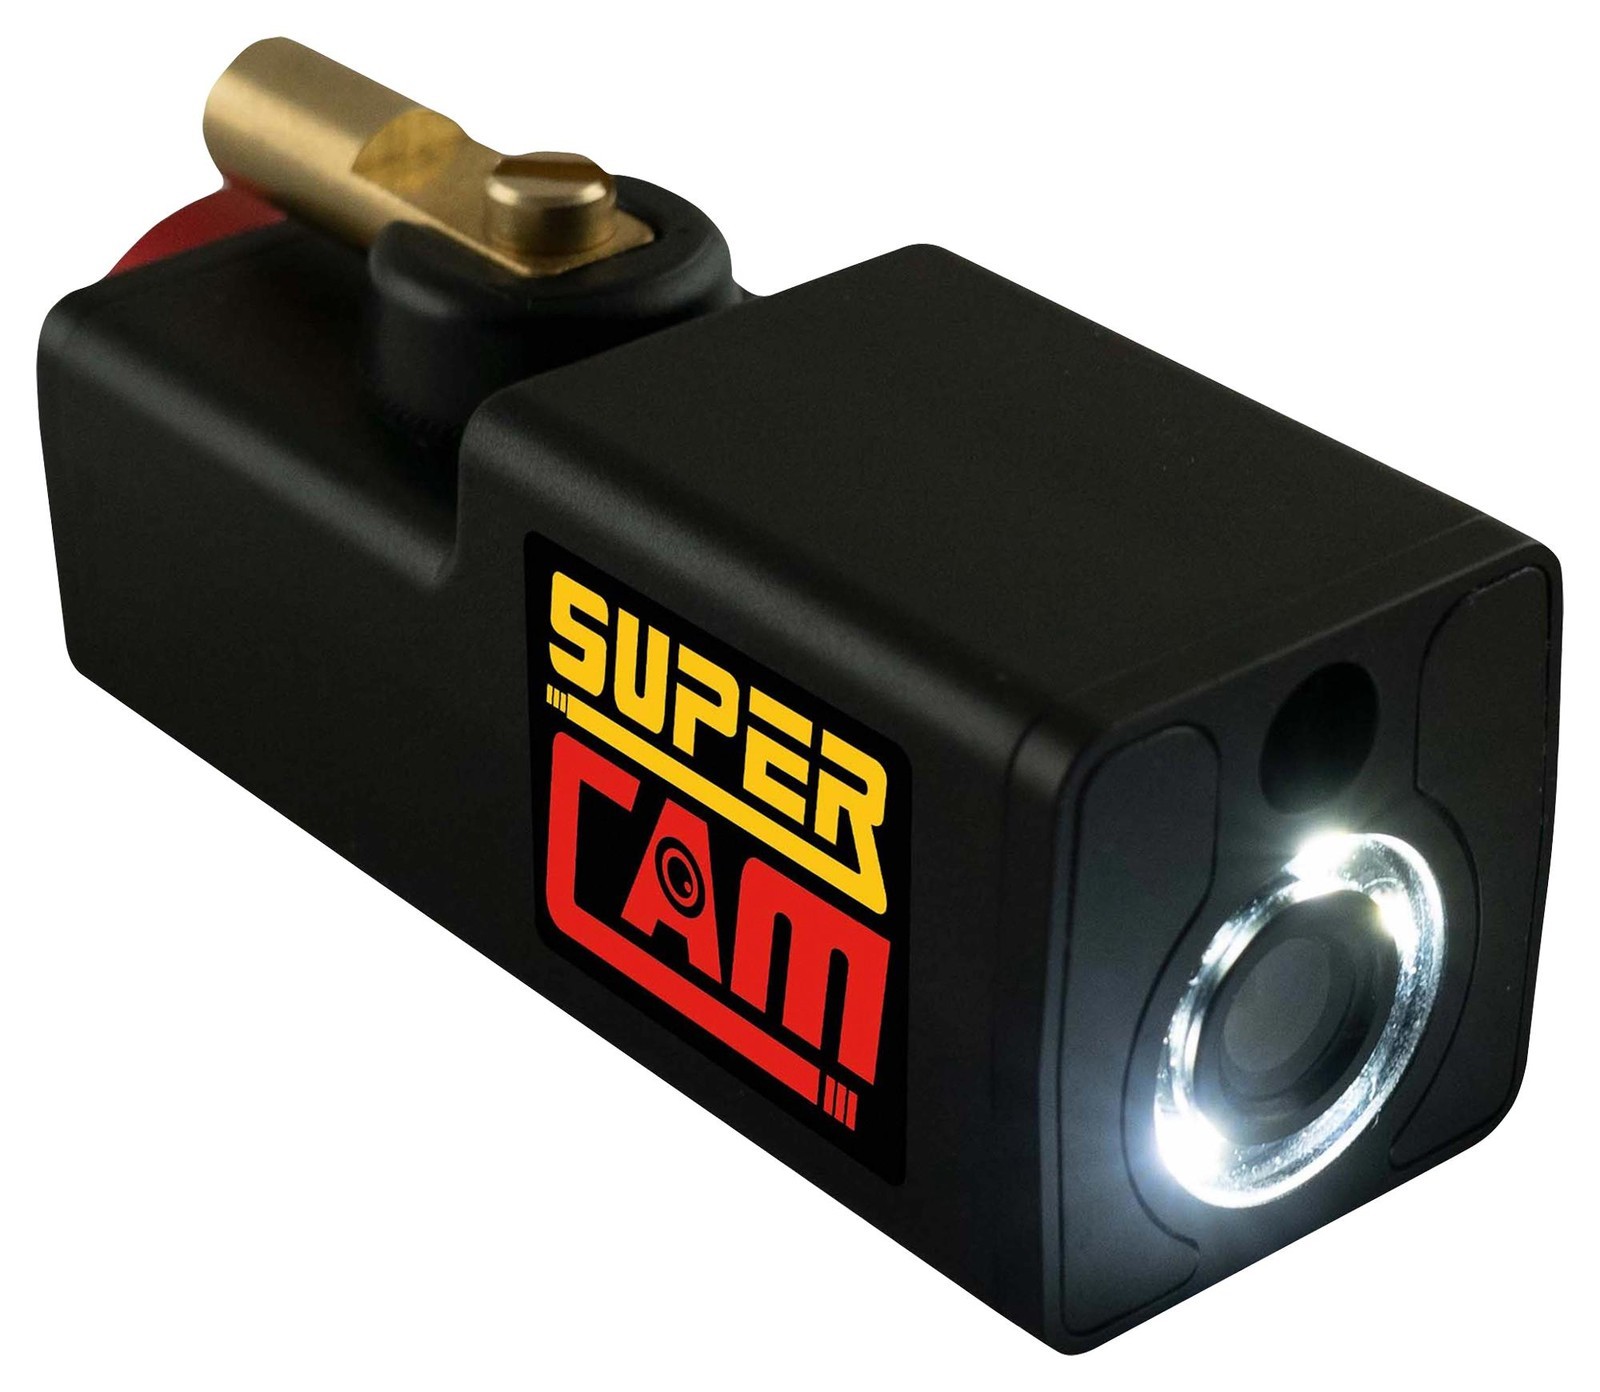 Super Rod Srcamv6.5 Inspection Cam, Wireless, 1280X720 Pixel